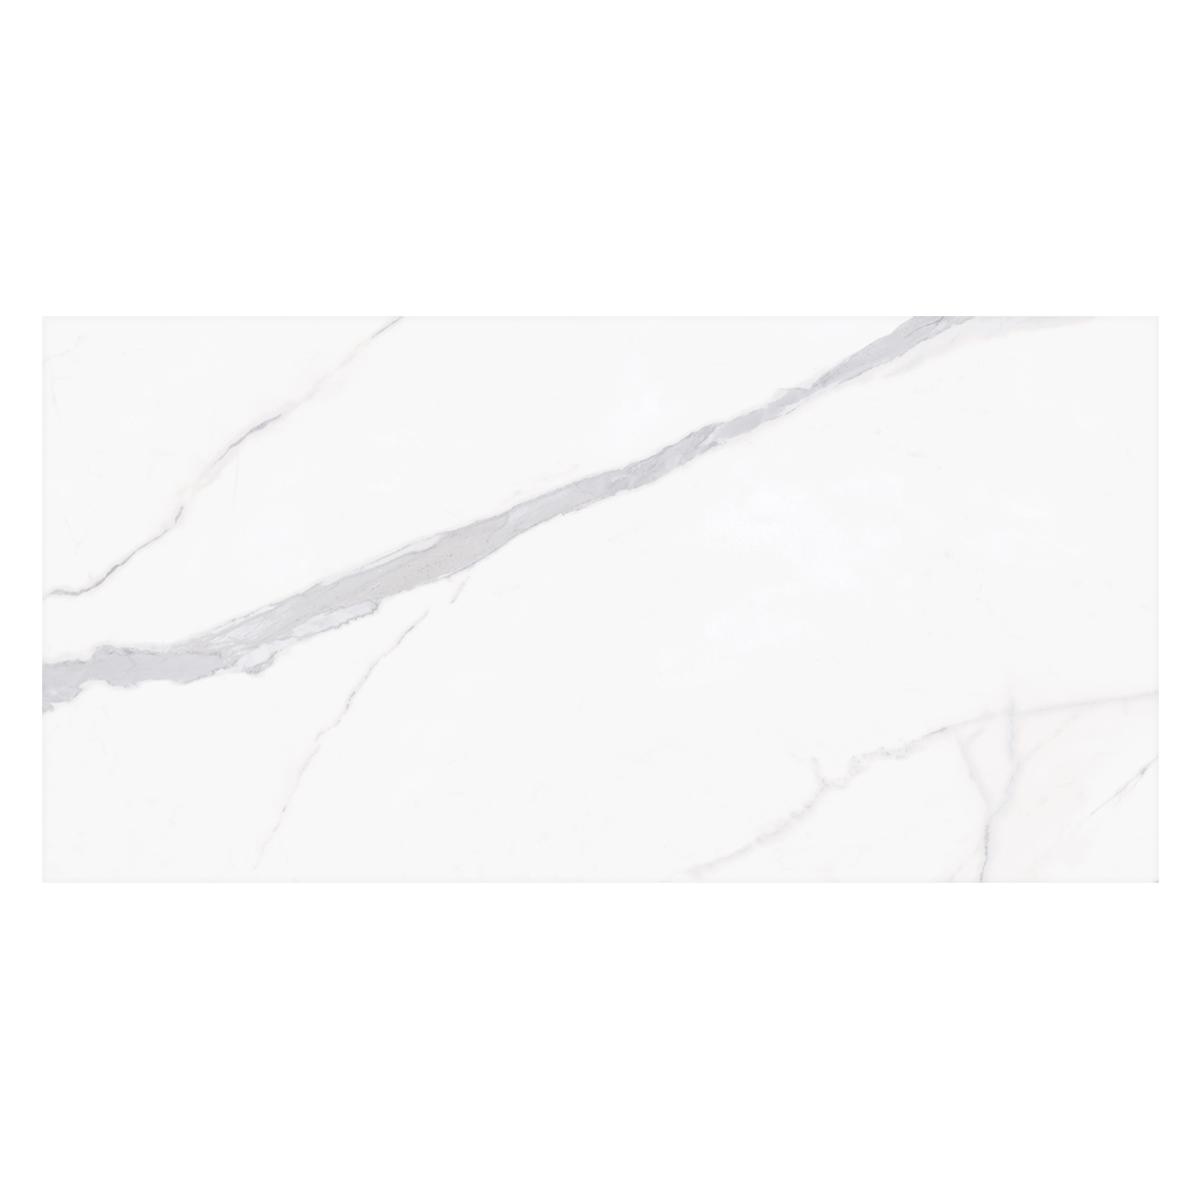 Porcelanato Trevi Blanco Brillante - 60X120 cm - 1.44 m2